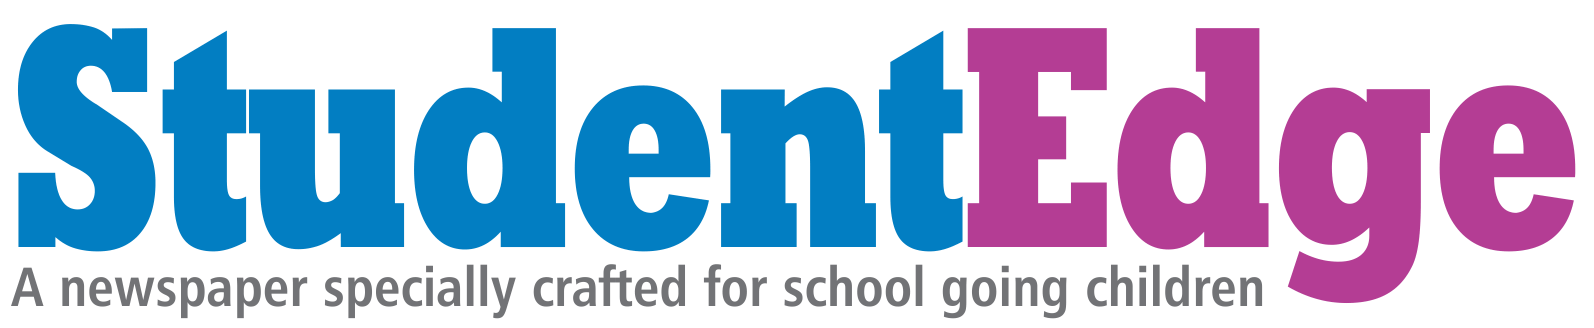 Student Edge Logo